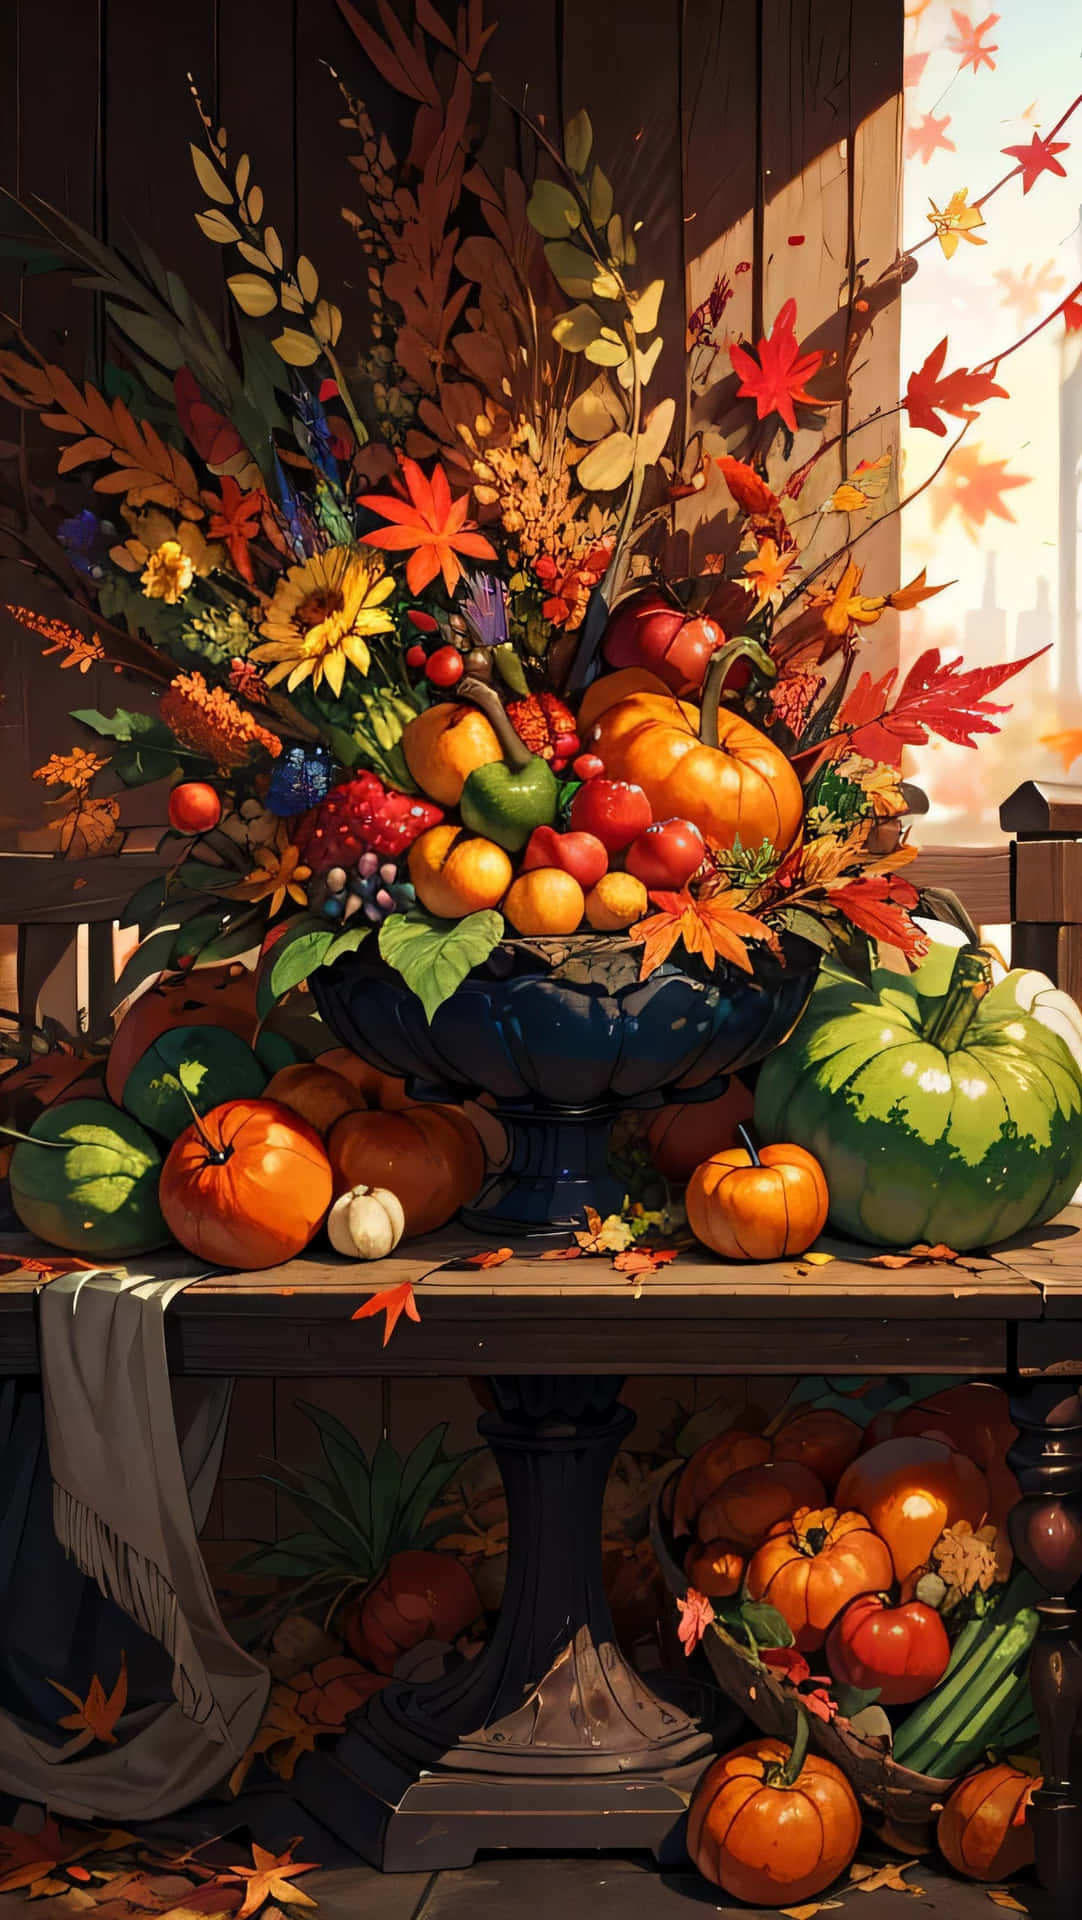 Autumn Harvest Pumpkin Display Wallpaper